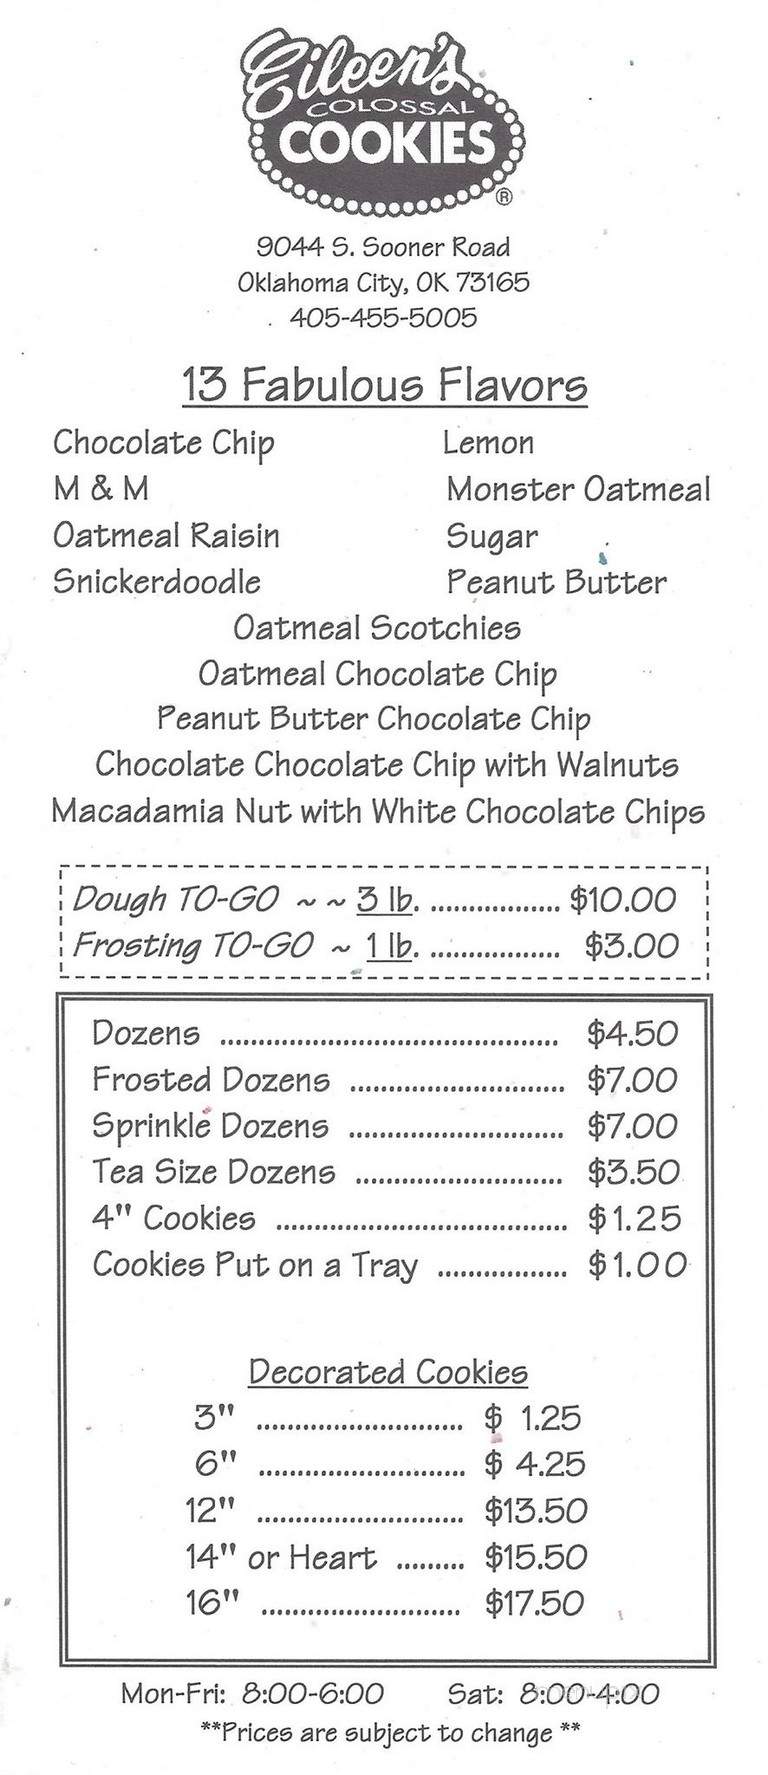 Eileen's Colossal Cookies - Oklahoma City, OK